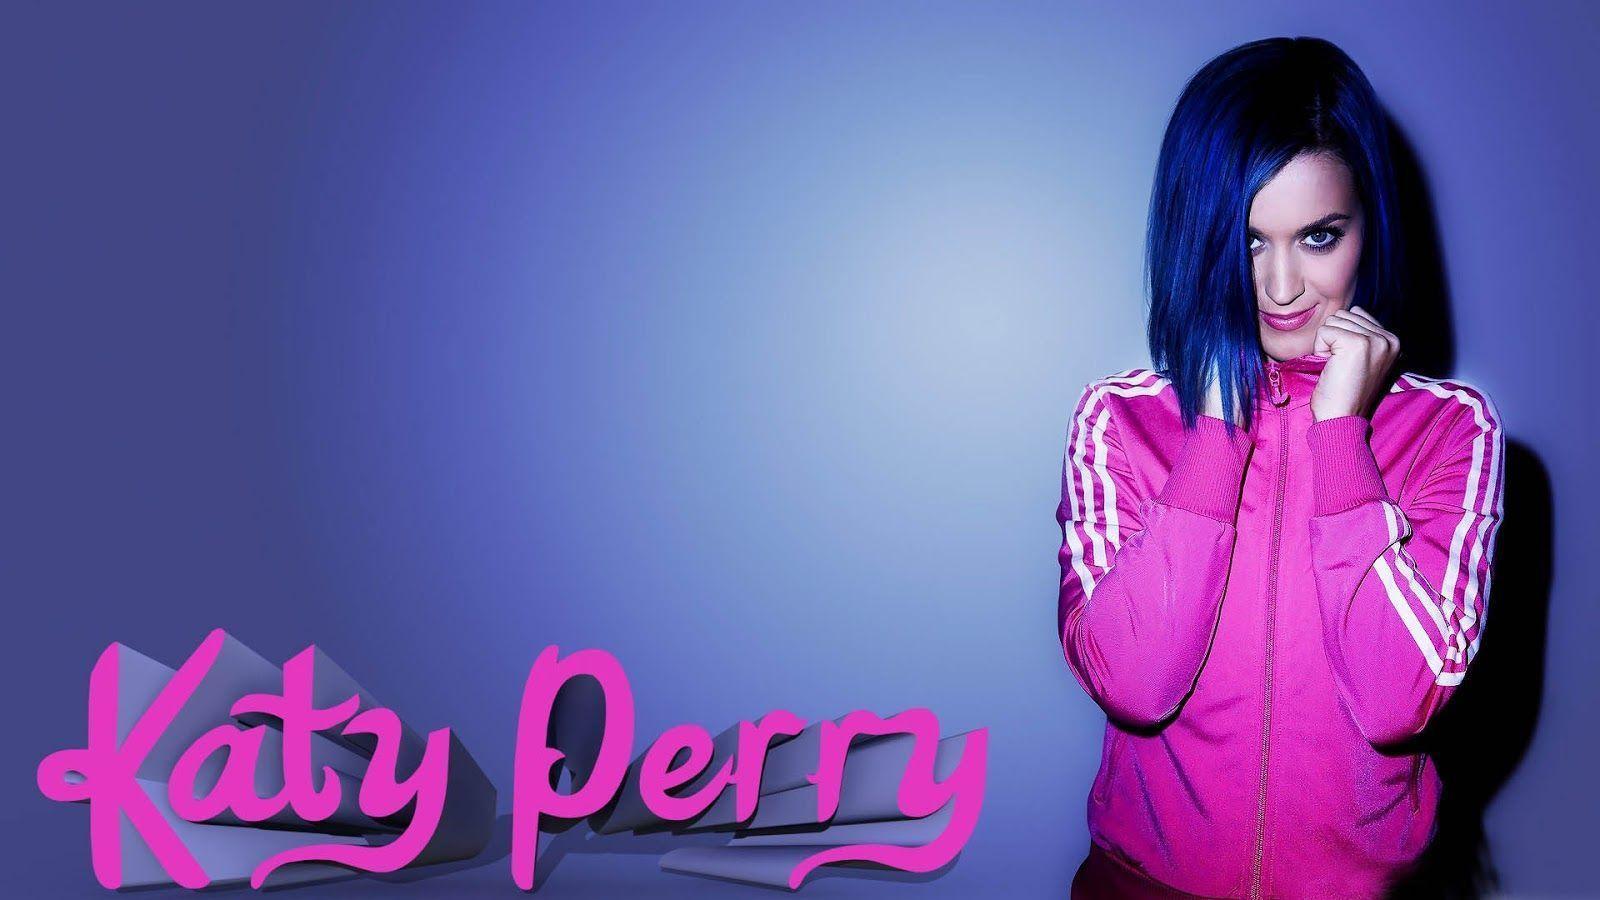 Katy Perry HD Wallpaper 2013_1 katy perry wallpaper HD free